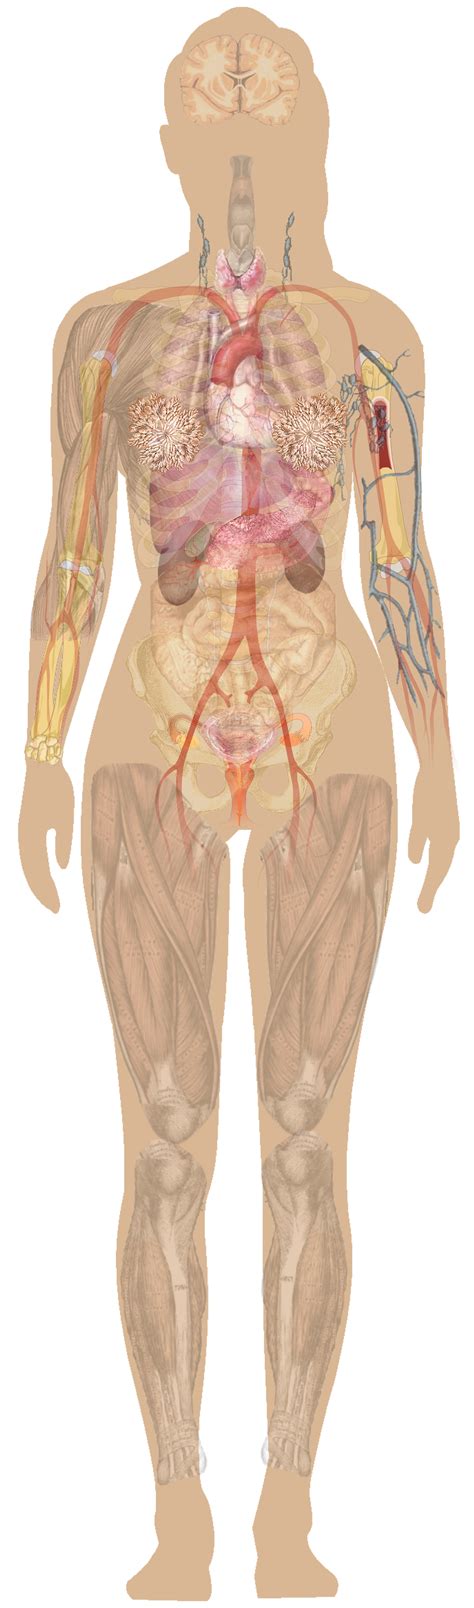 Chest pain protocols part ii. Female Chest Anatomy Diagram Female human anatomy | Human ...